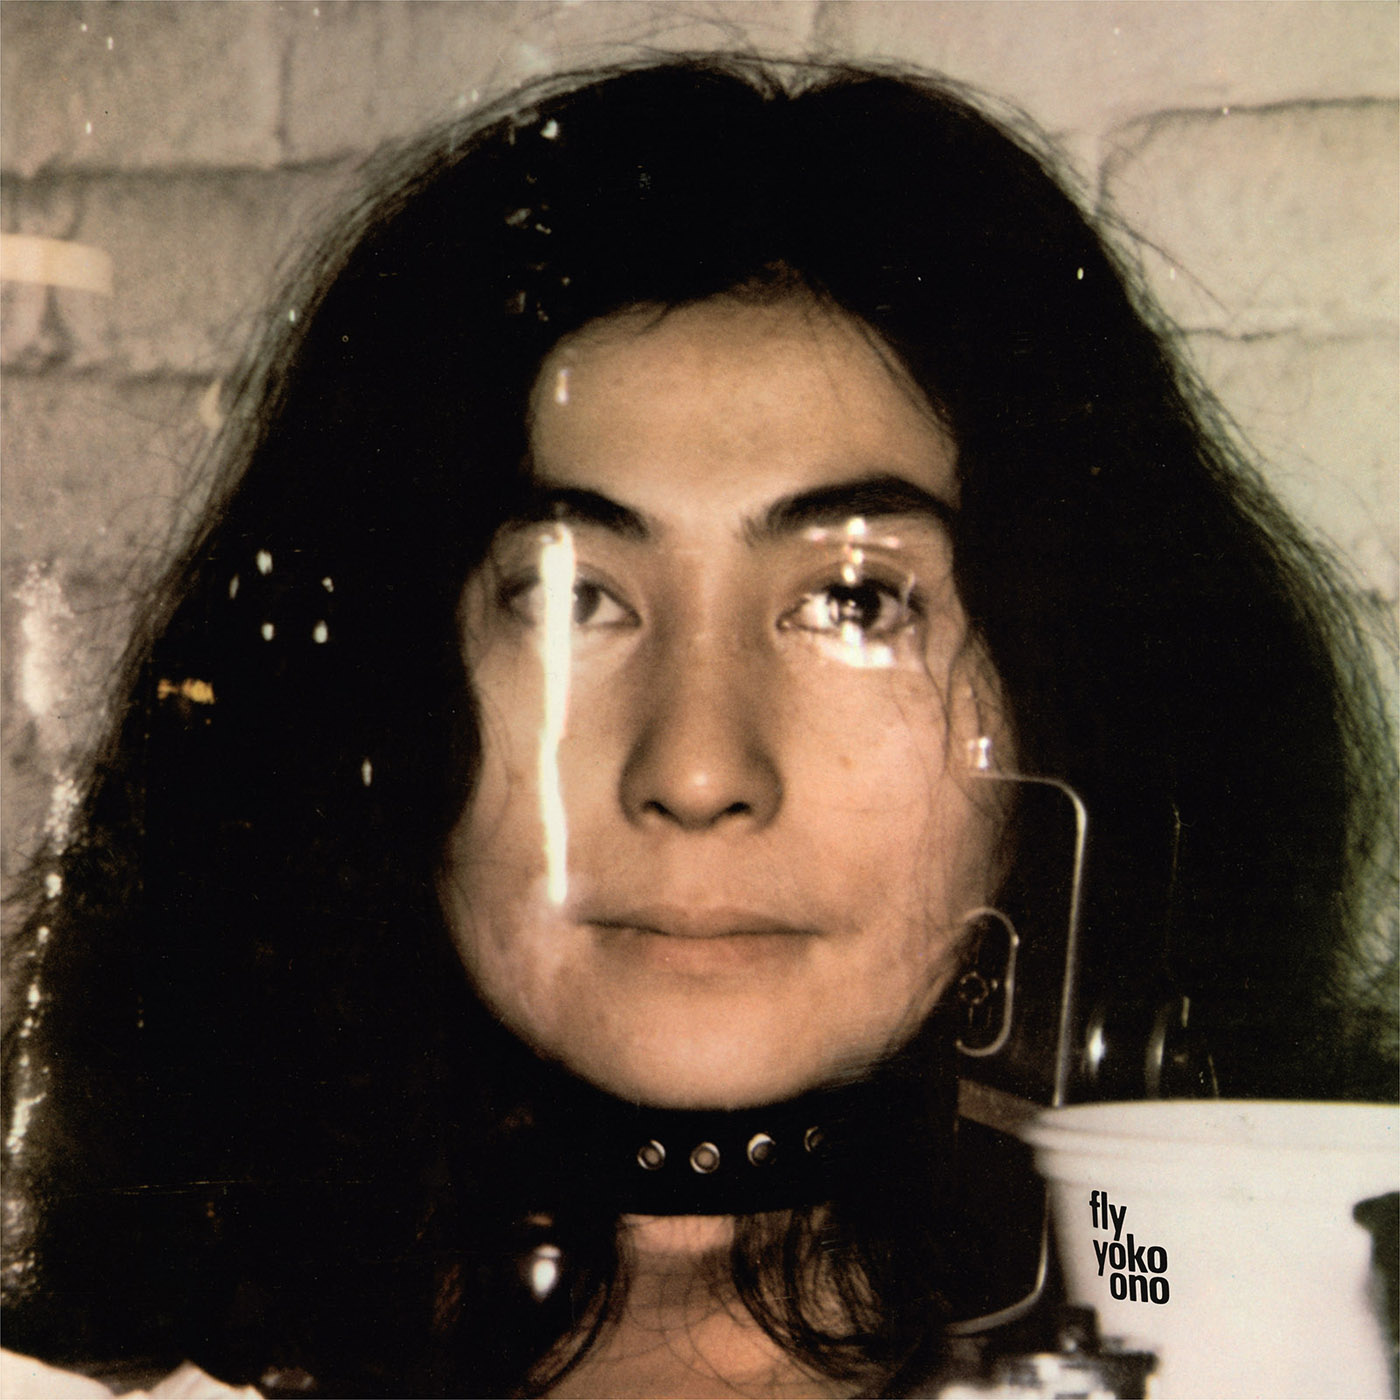 Yoko Ono - Fly (Reissue) - 2xCD